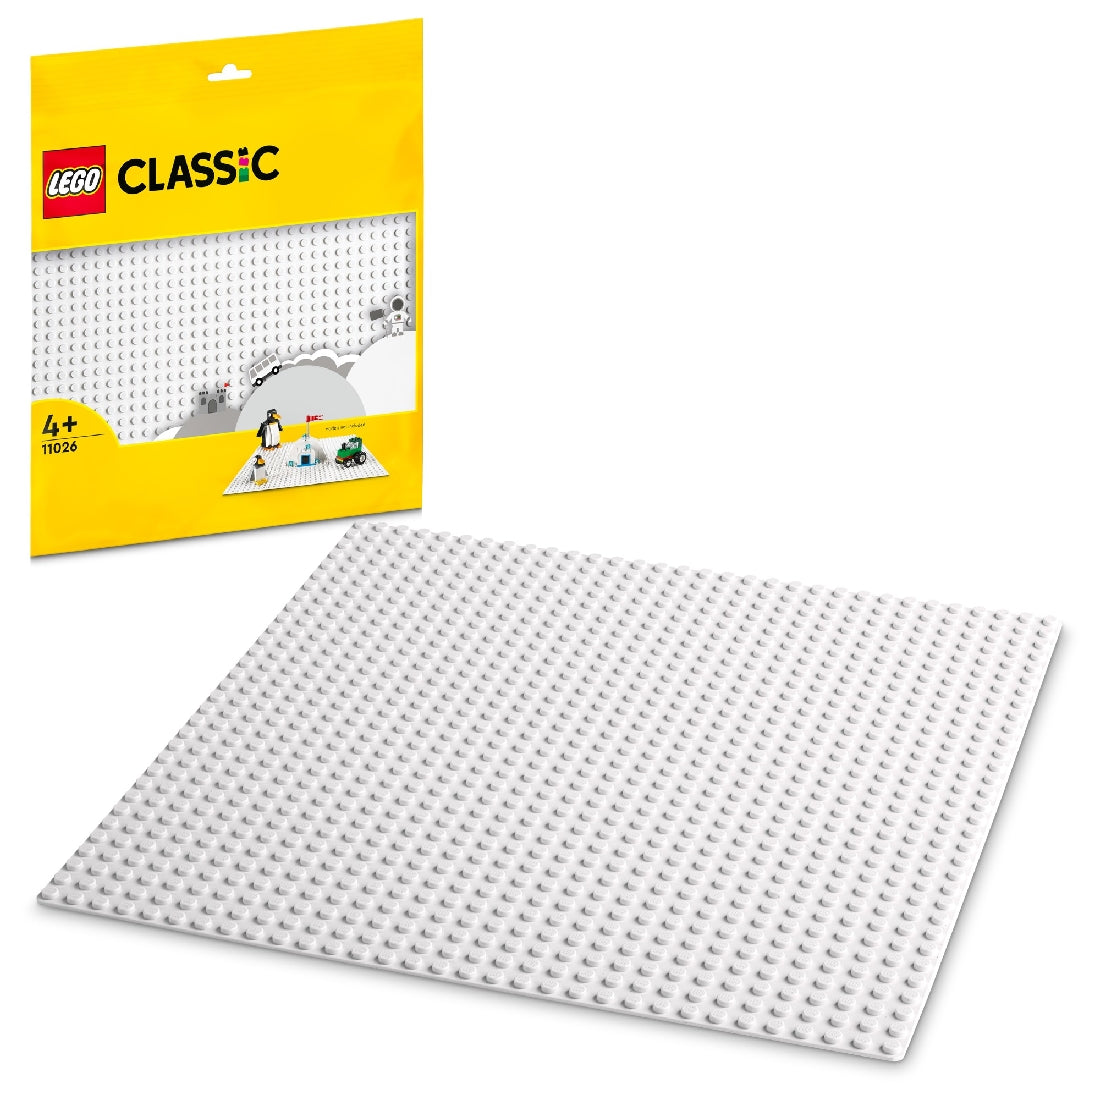 LEGO CLASSIC WHITE BASEPLATE 11026 AGE:4+